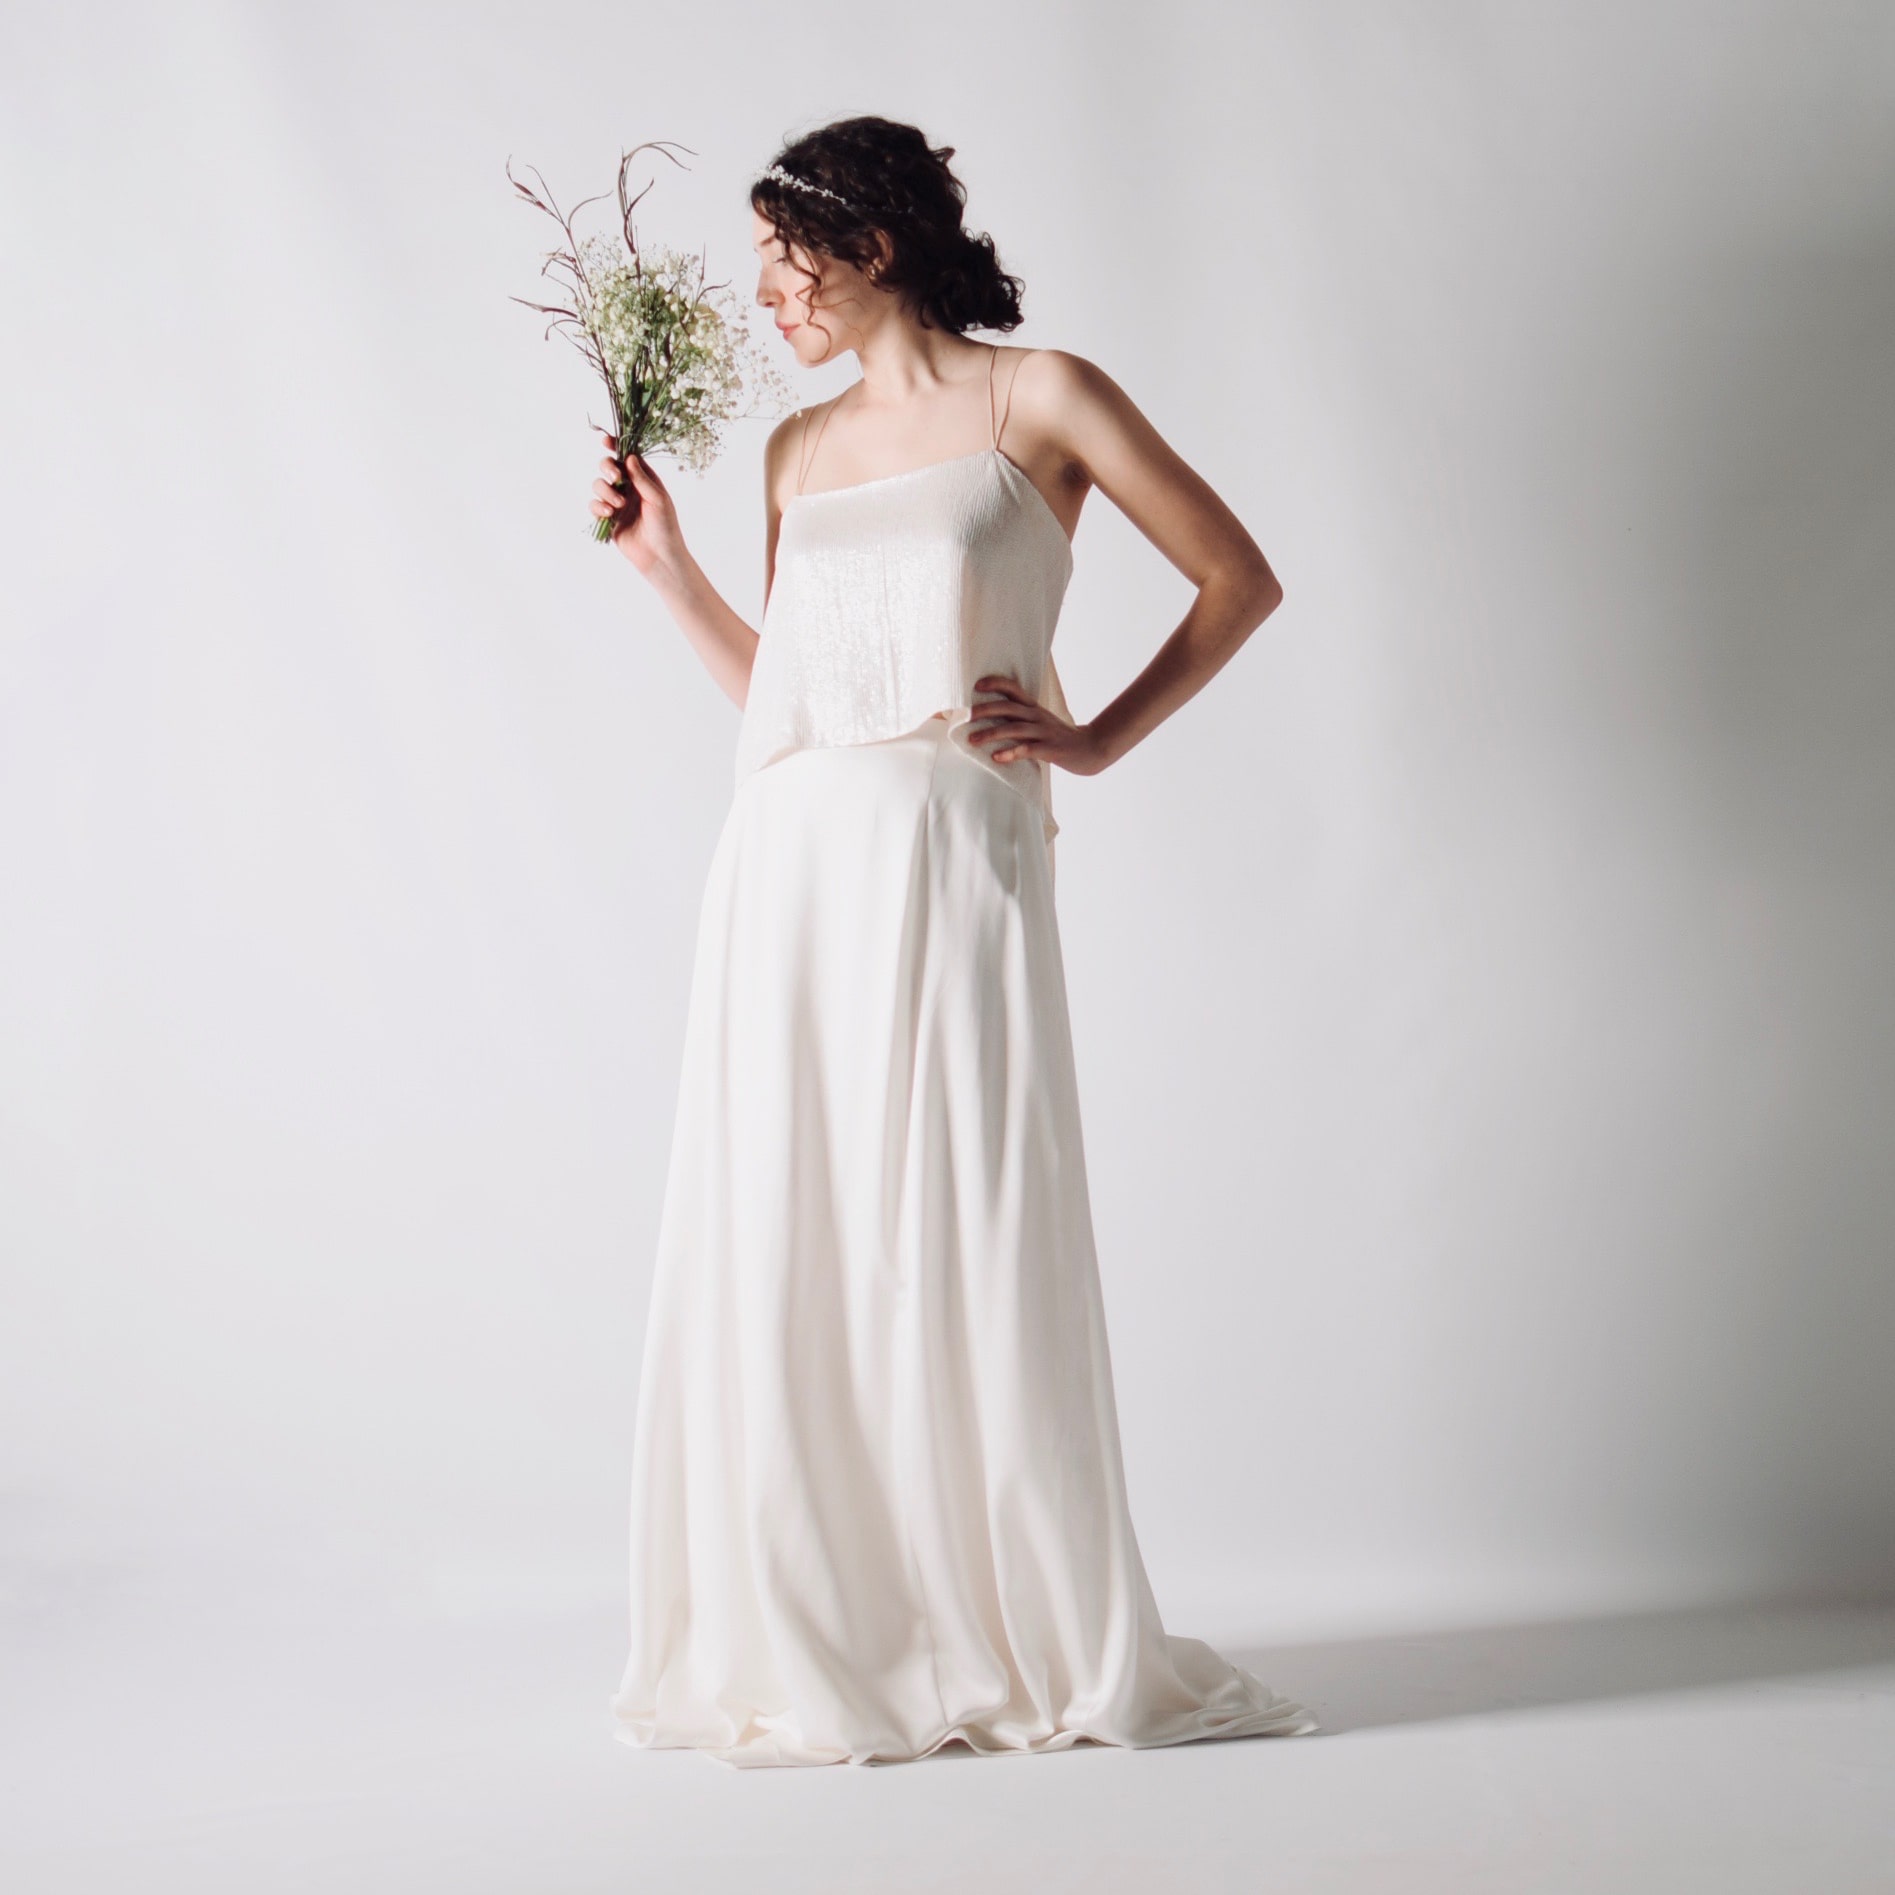 Sensual minimalist wedding dress 